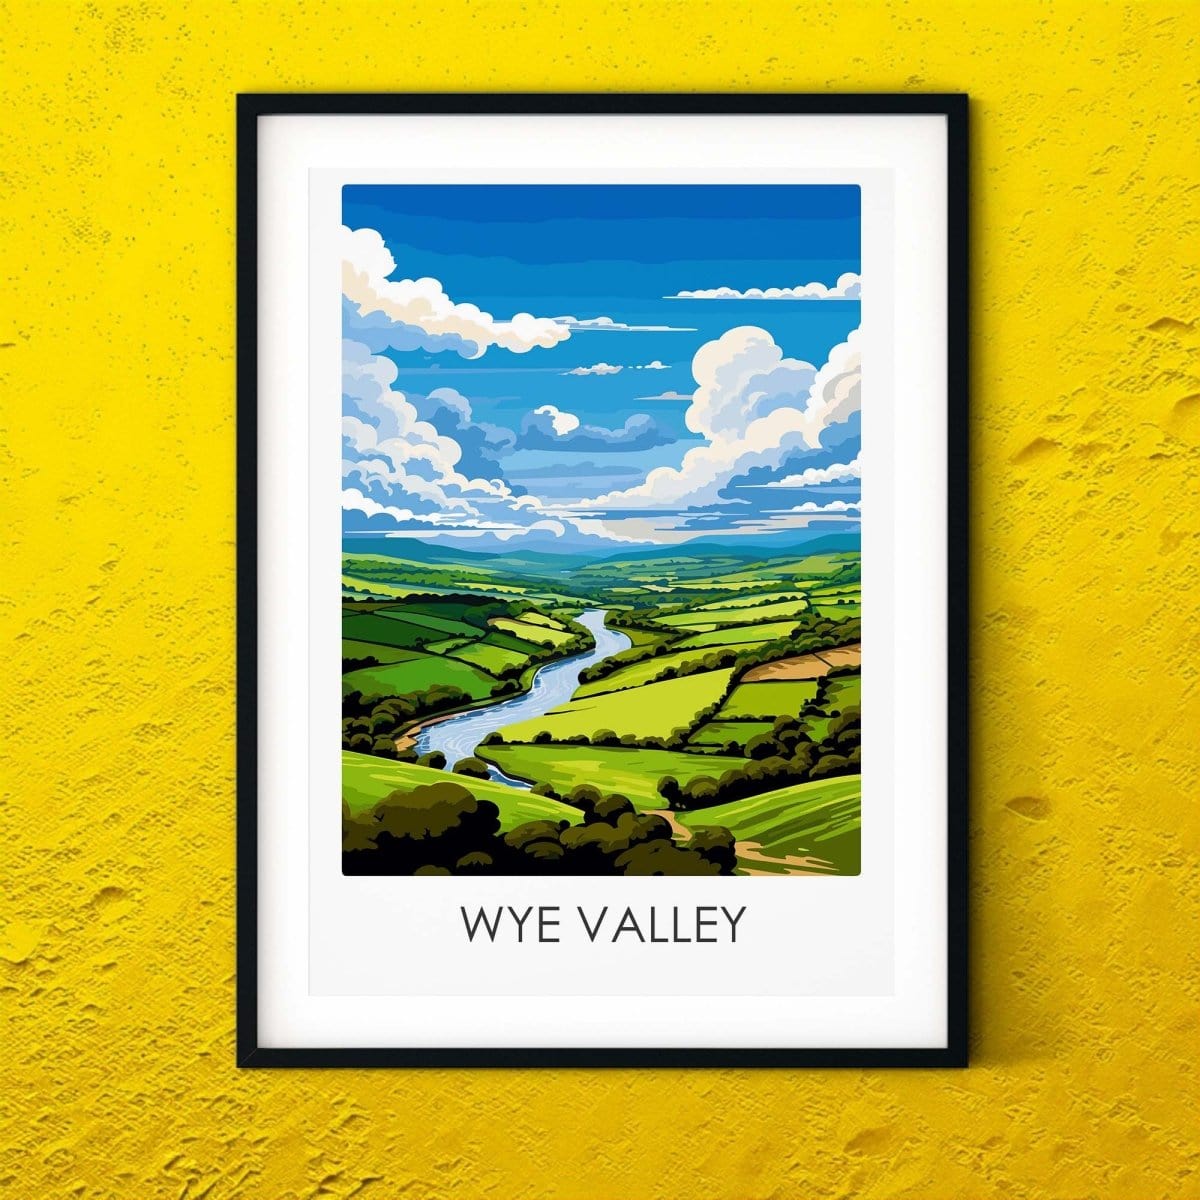 Wye Valley travel posters UK landscape print